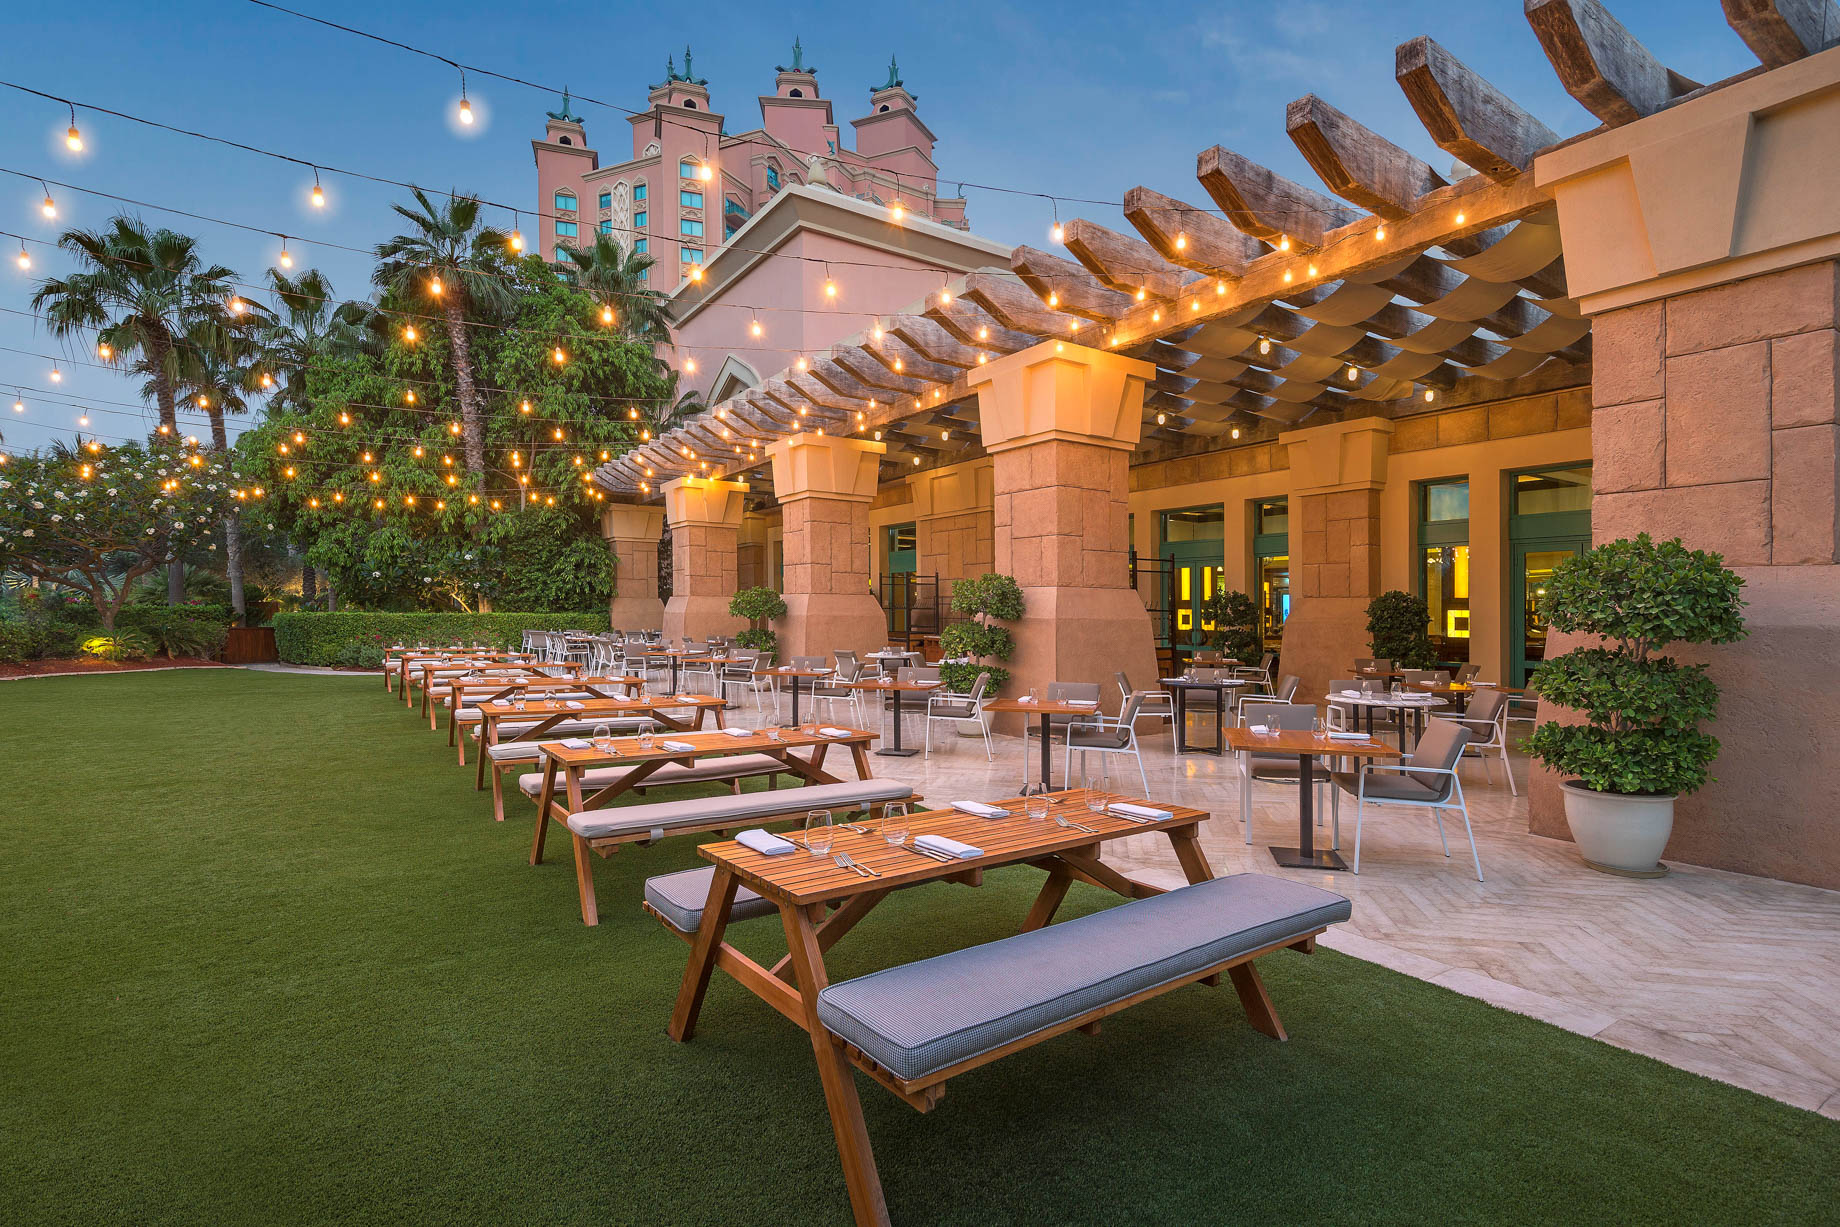 Atlantis The Palm Resort – Crescent Rd, Dubai, UAE – Bread Street Kitchen and Bar Exterior